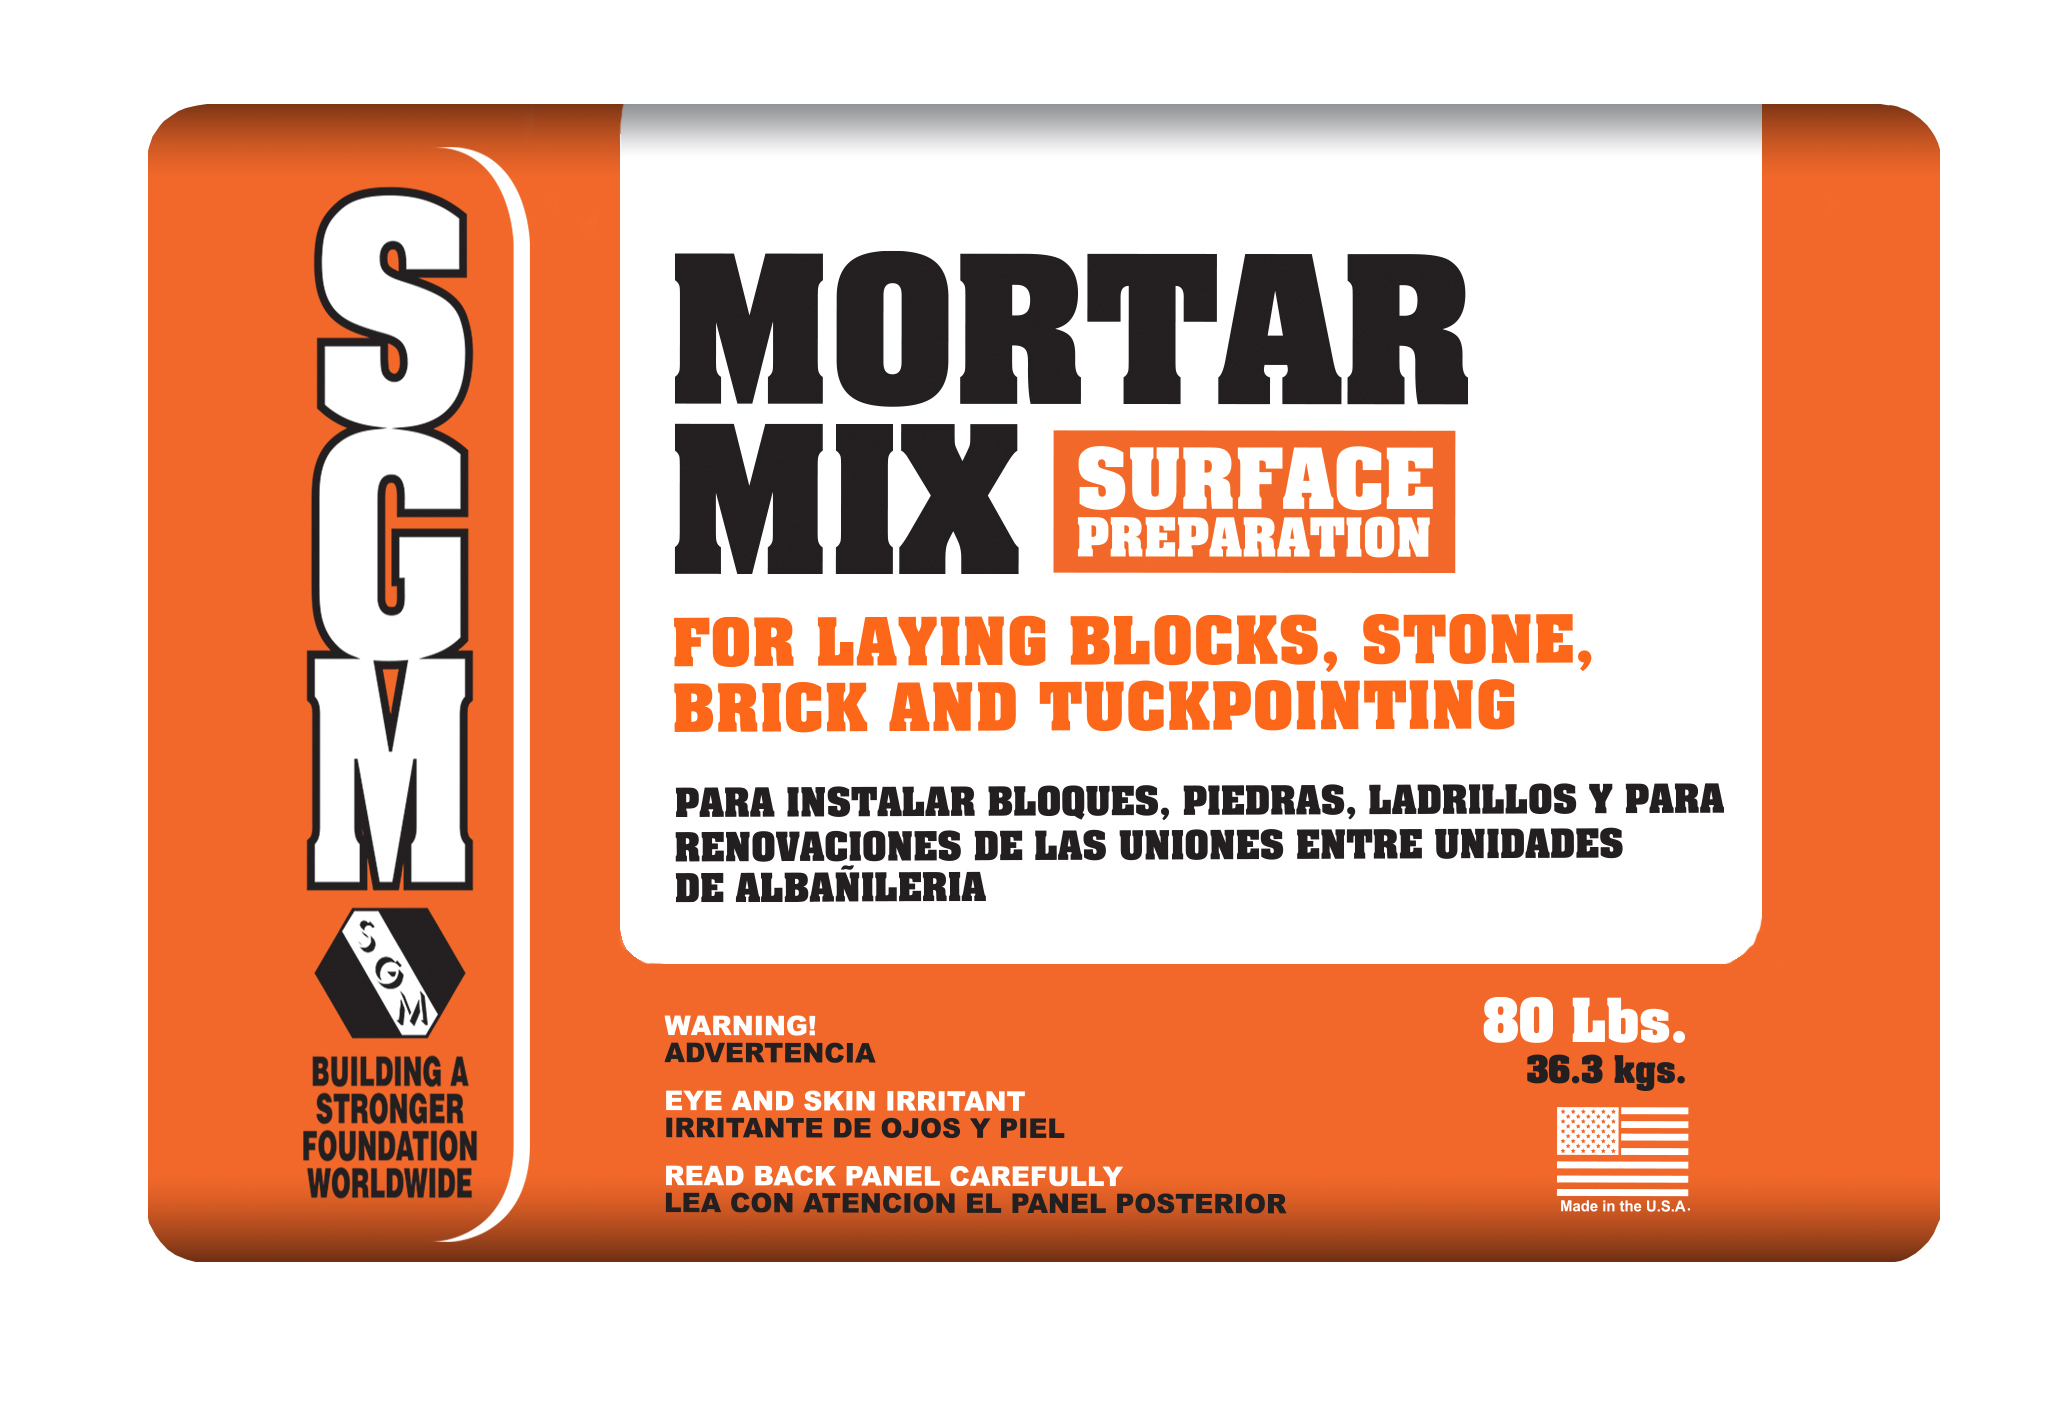 Mortar Mix Surface Preparation - SGM, Inc.